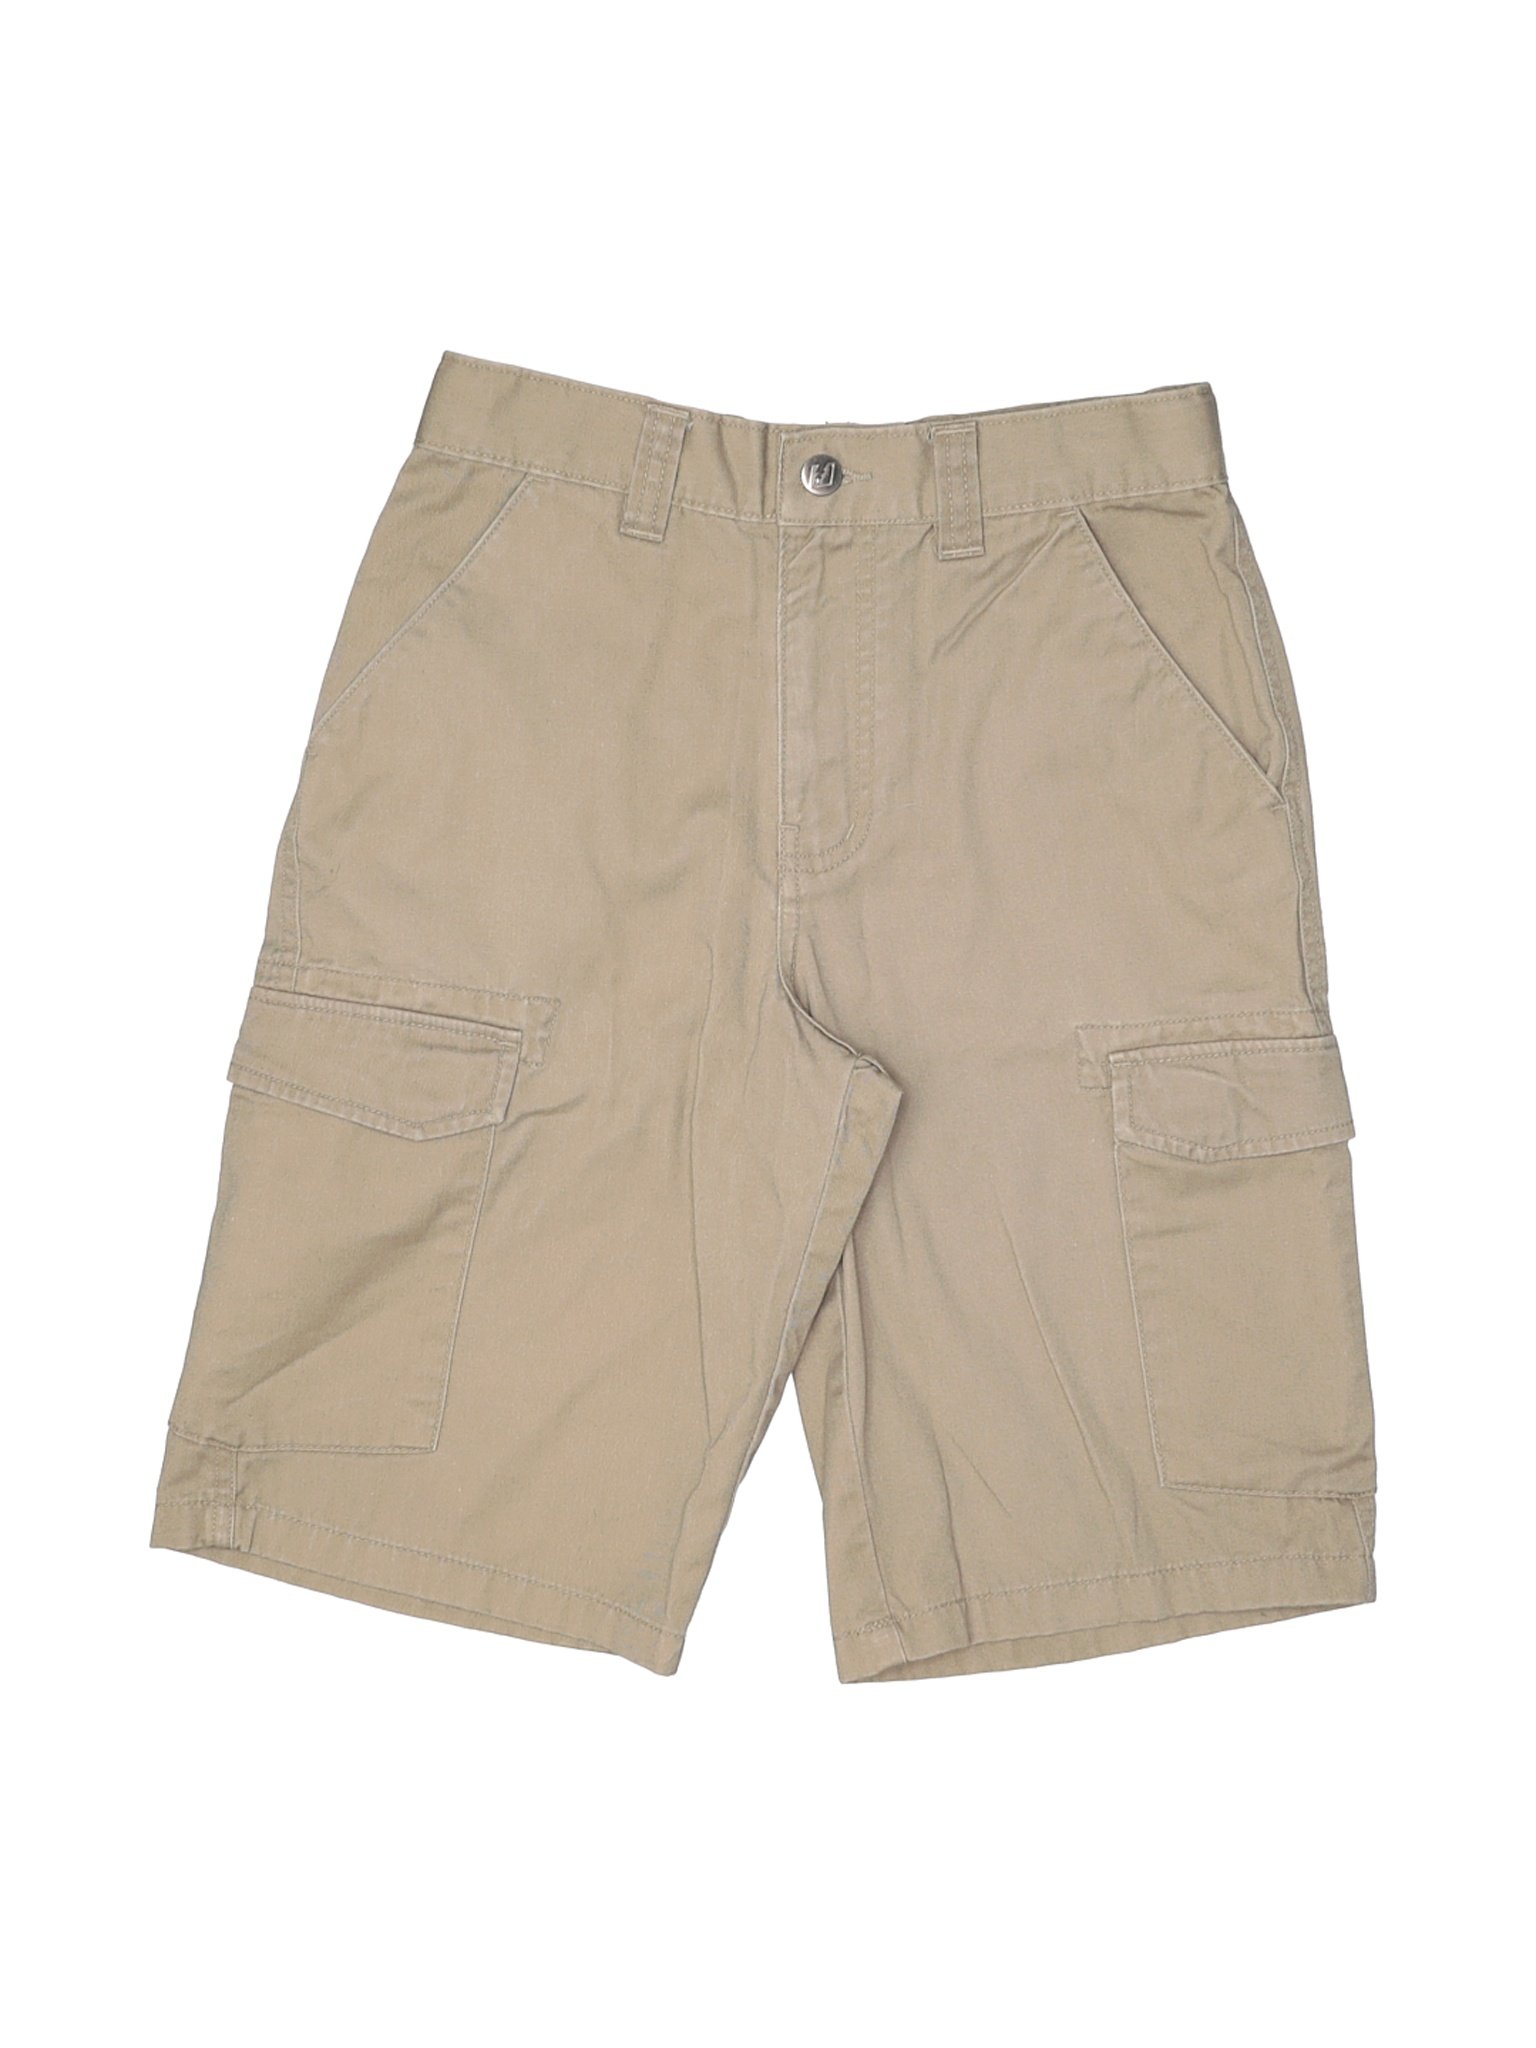 Amplify Boys Brown Cargo Shorts 14 | eBay